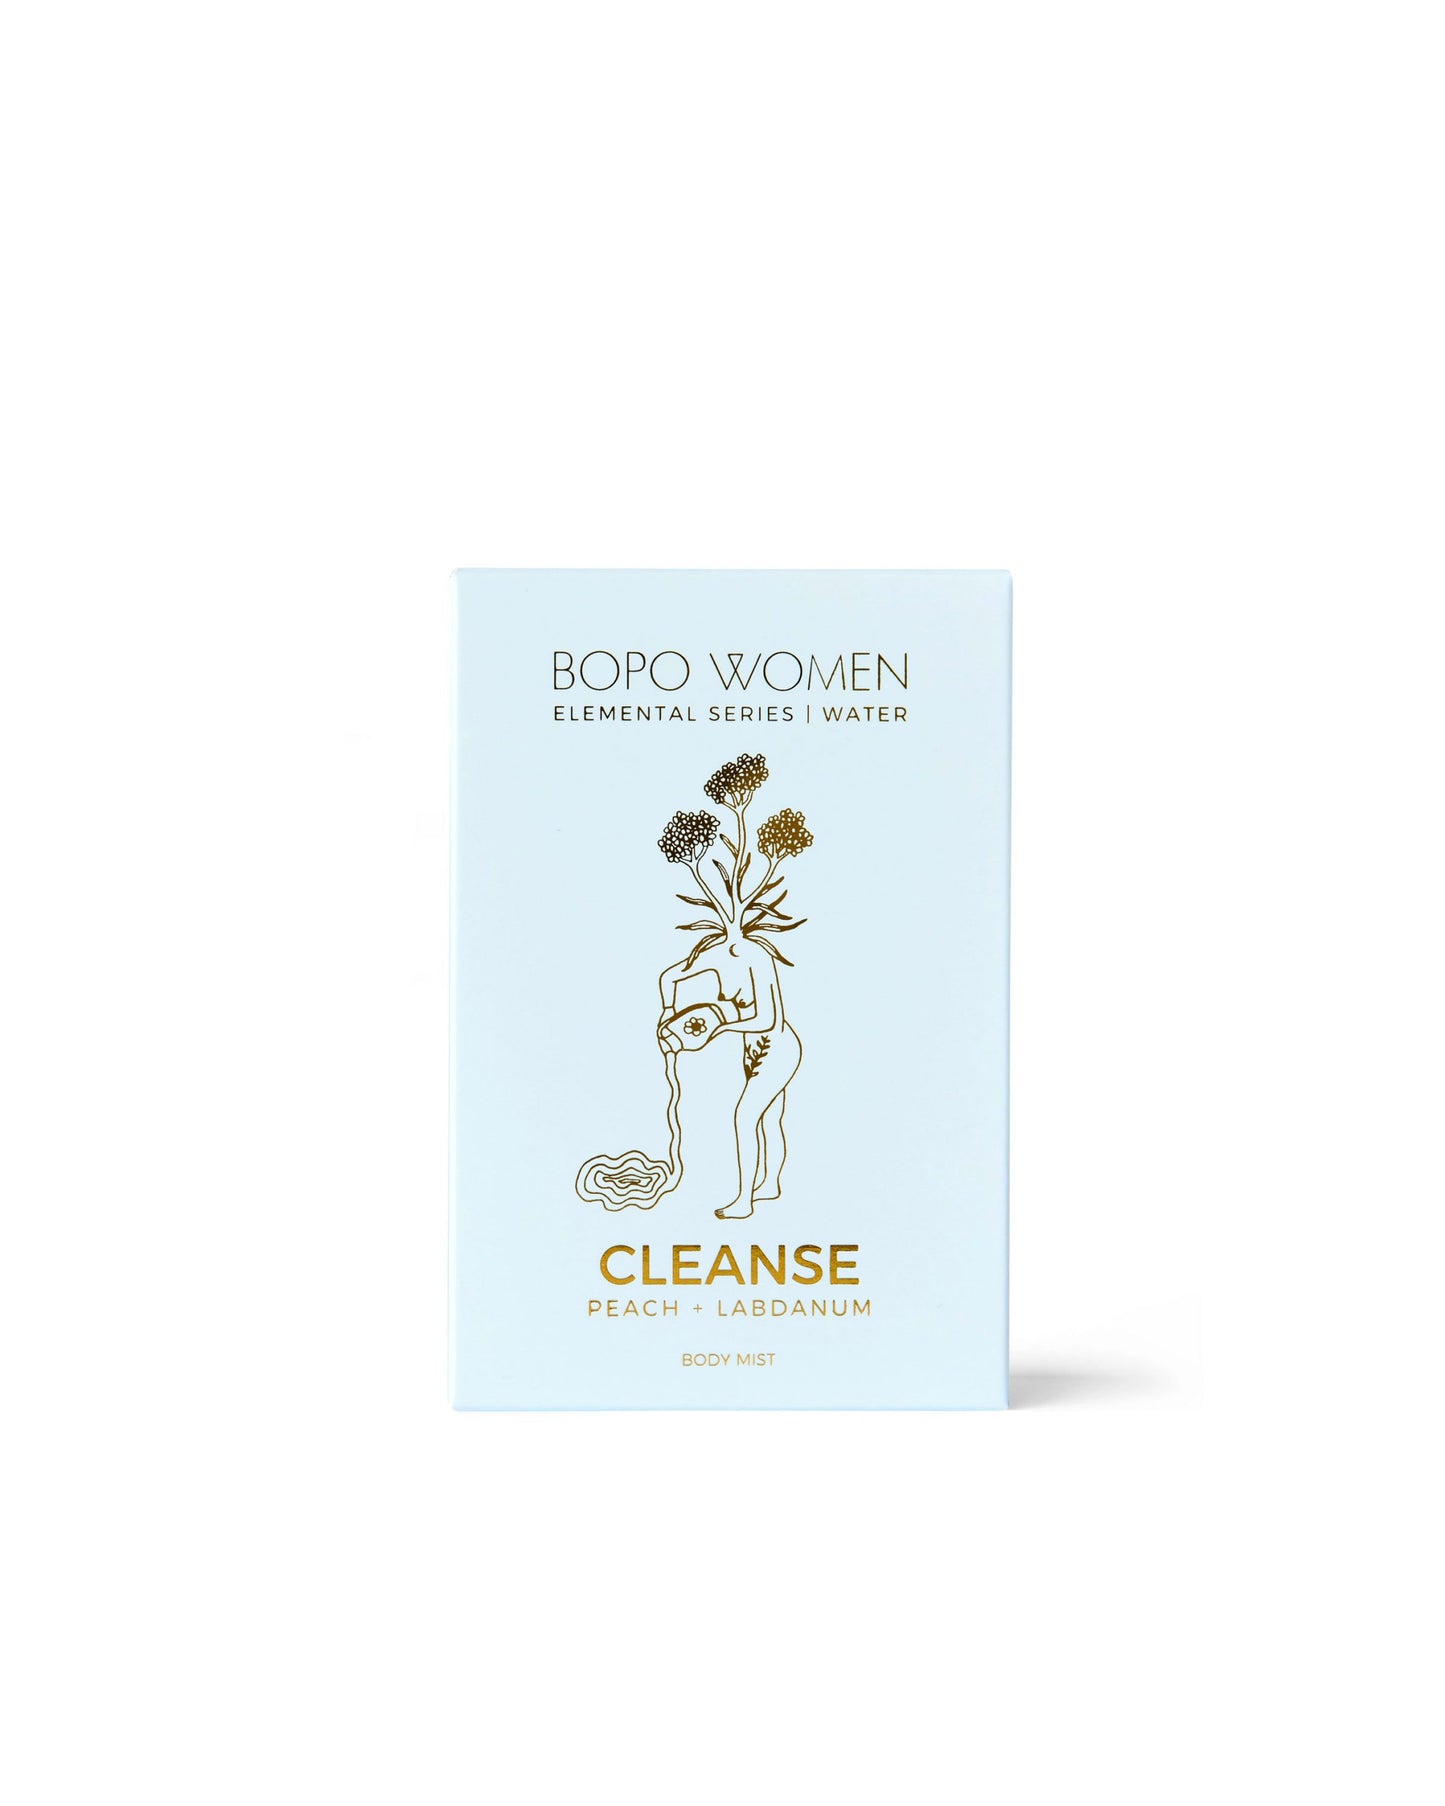 Bopo Women - Cleanse Body Mist | The Ivy Plant Studio  | Body Mists| Bopo women | perfume 